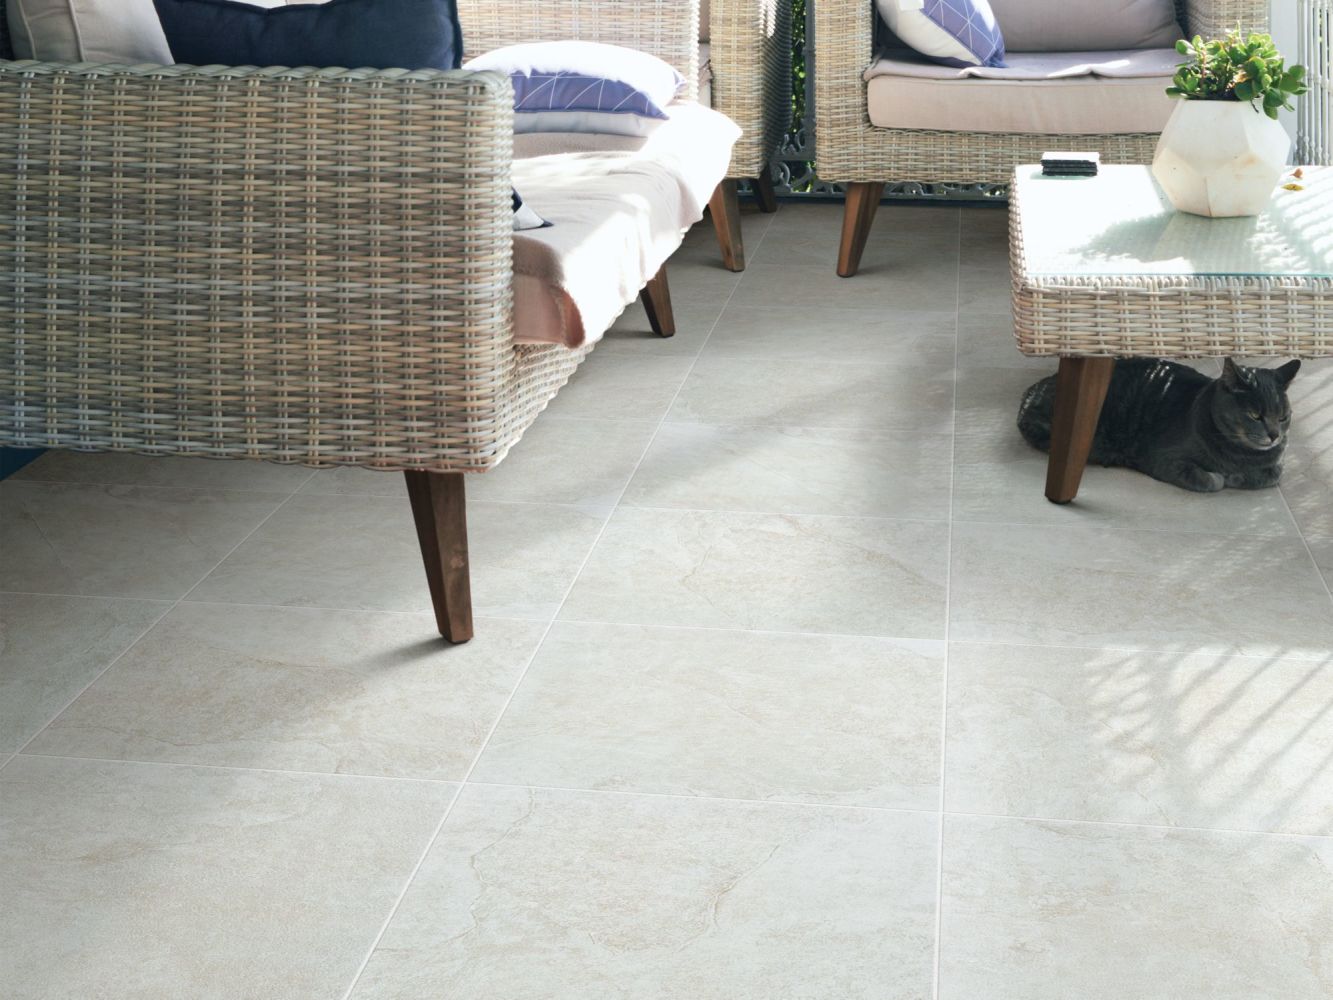 Shaw Floors Ceramic Solutions Crown 12×24 White 00100_226TS